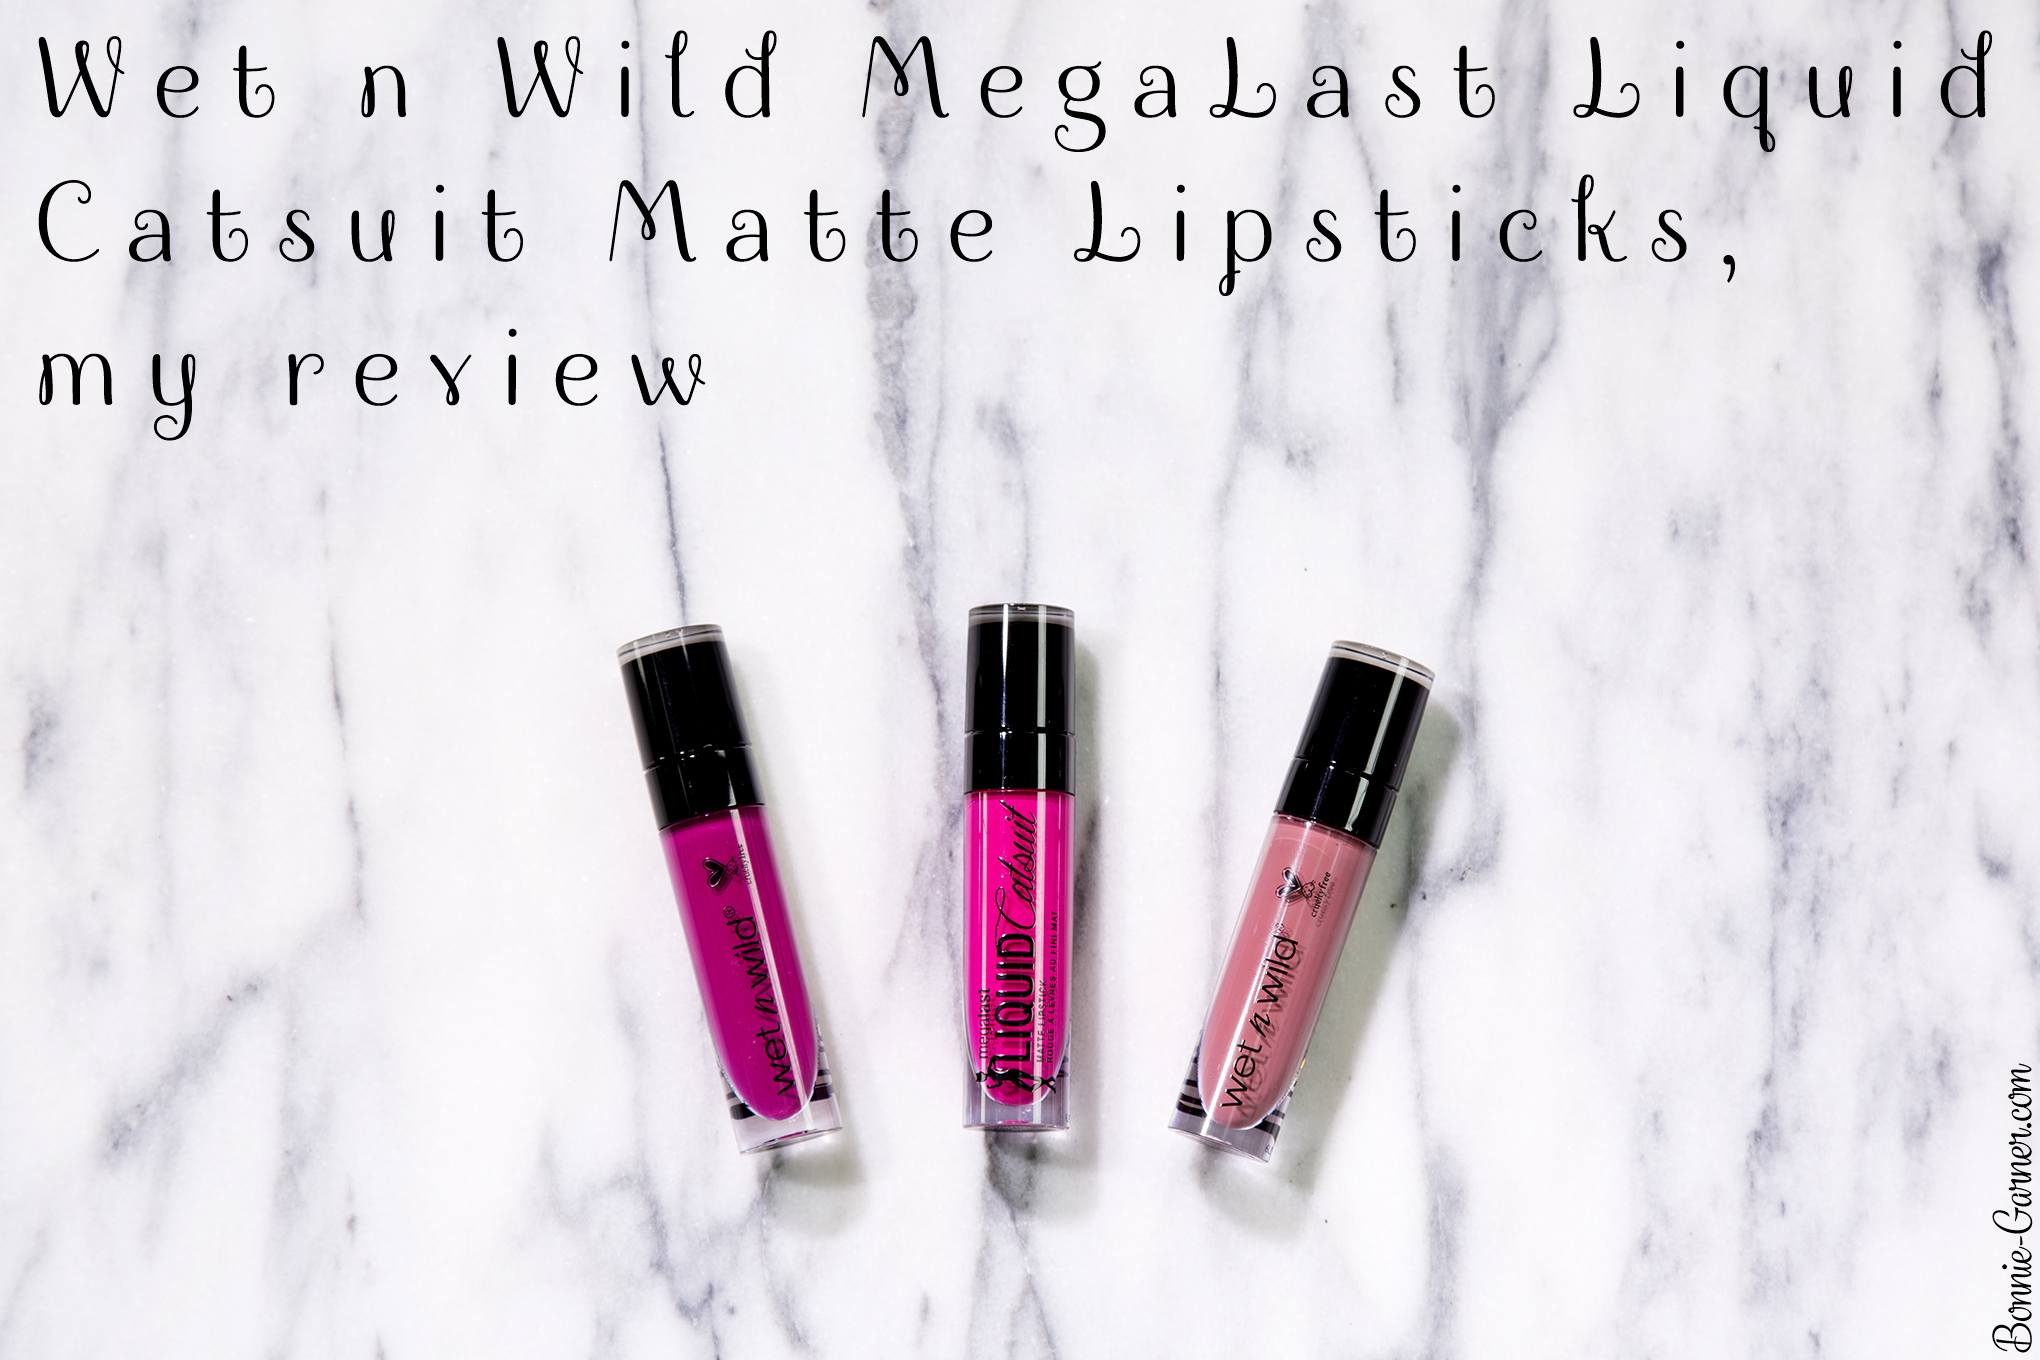 Wet n Wild MegaLast Liquid Catsuit Matte Lipsticks, my review